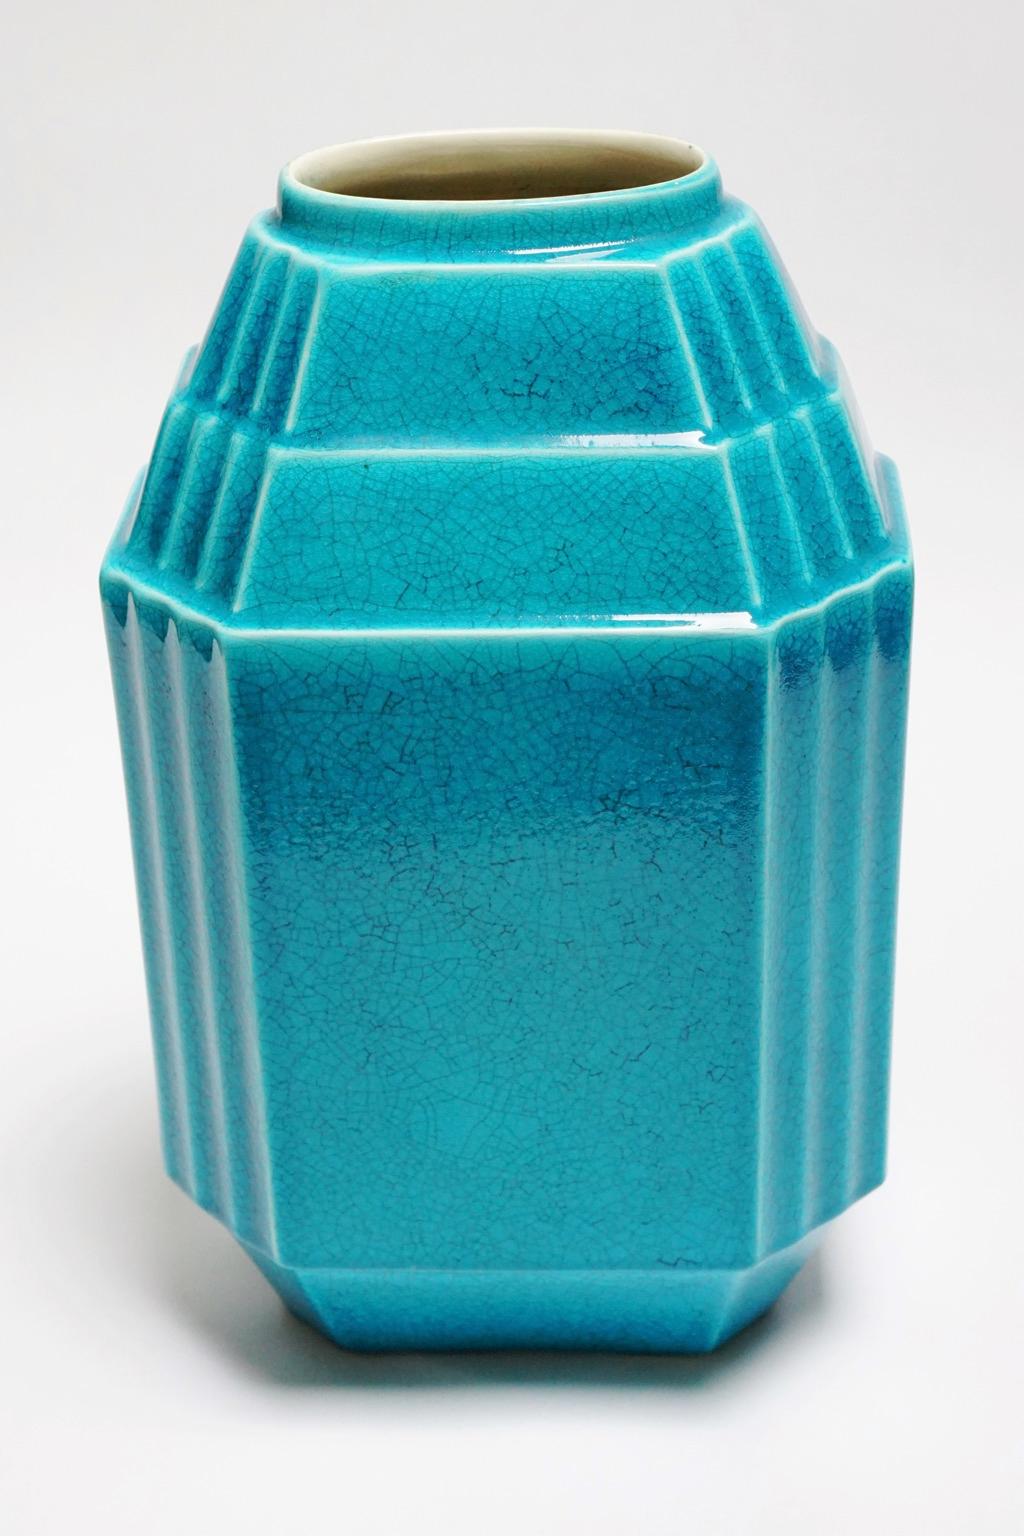 An Art Deco Keramis Boch geometric crackled monochrome turquoise vase by Charles Catteau. F 1050. 

Marks: Boch Freres.

Measure: Diameter top 9 cm, diameter base 12 cm, height 30 cm.